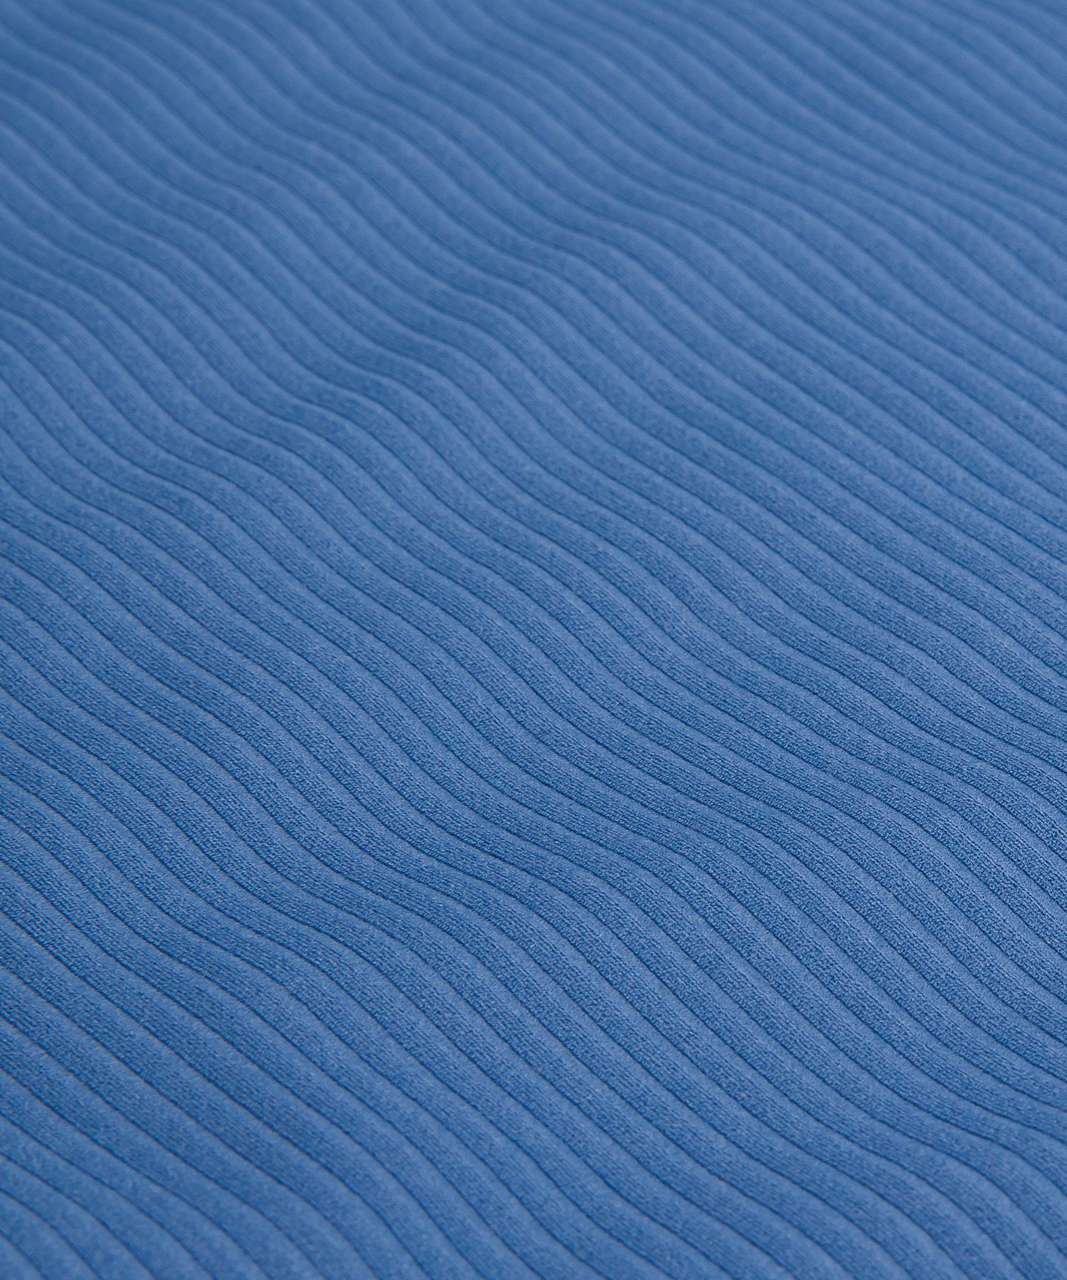 Lululemon All It Takes Ribbed Nulu Long-Sleeve Shirt - Pitch Blue